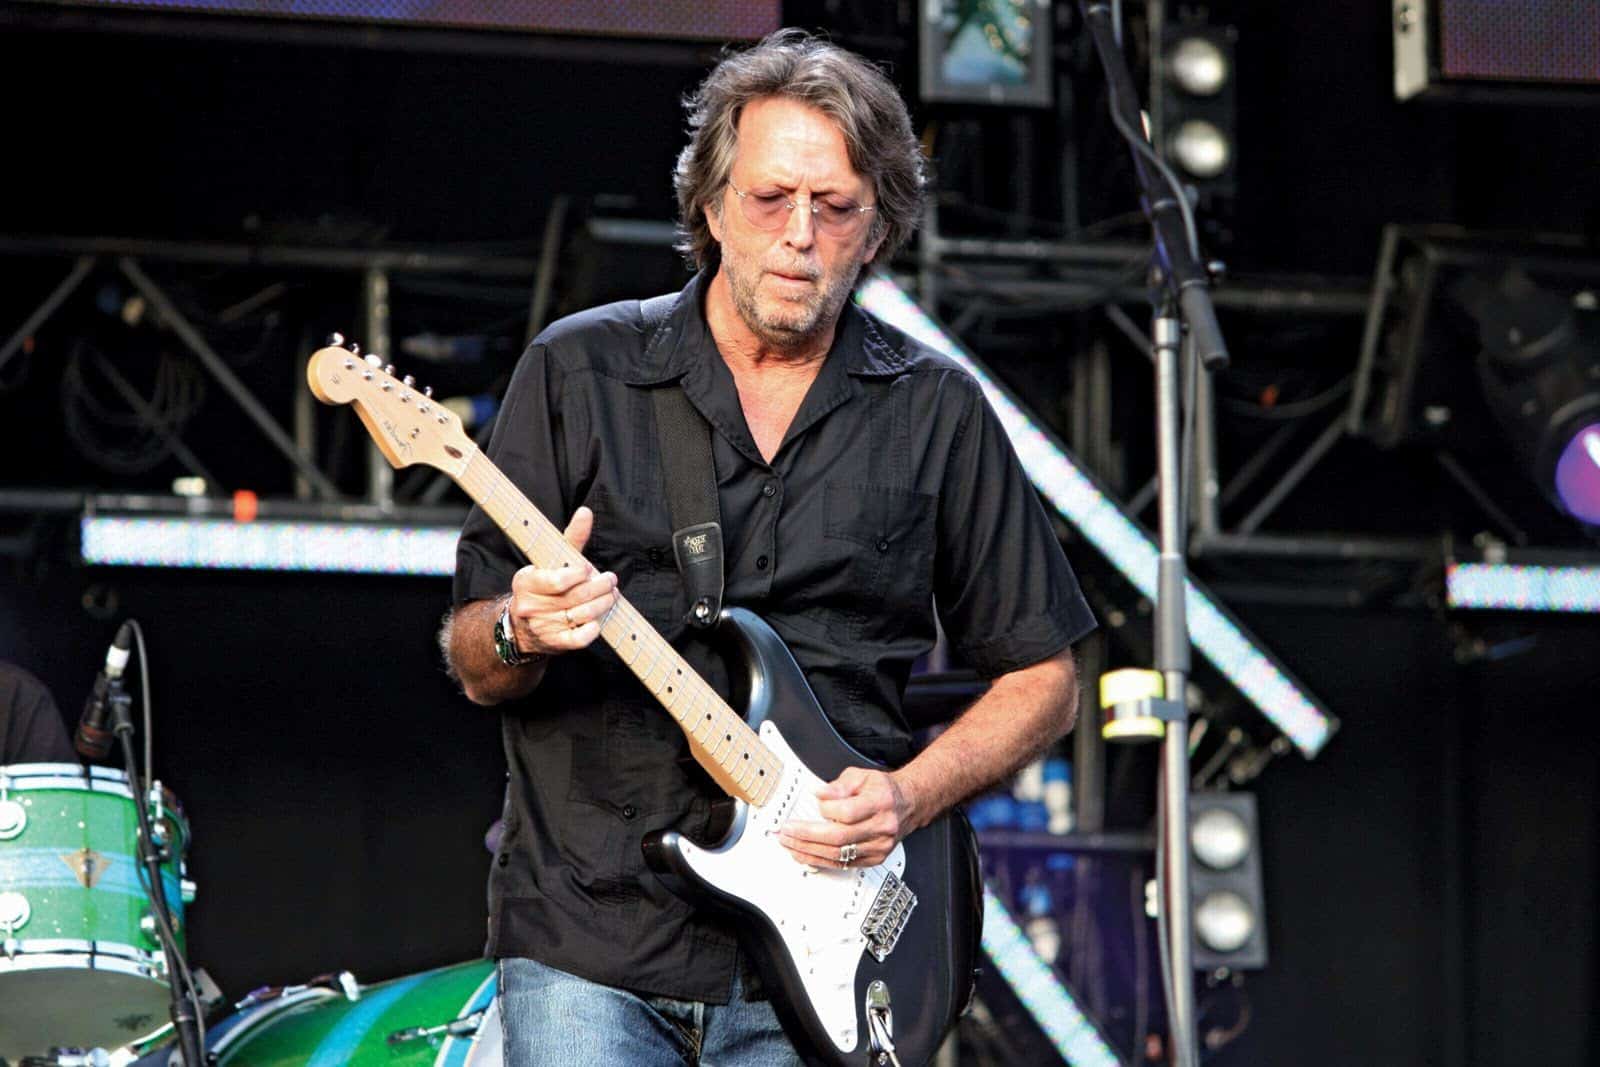 Pretending by Eric Clapton (Lyrics only) 